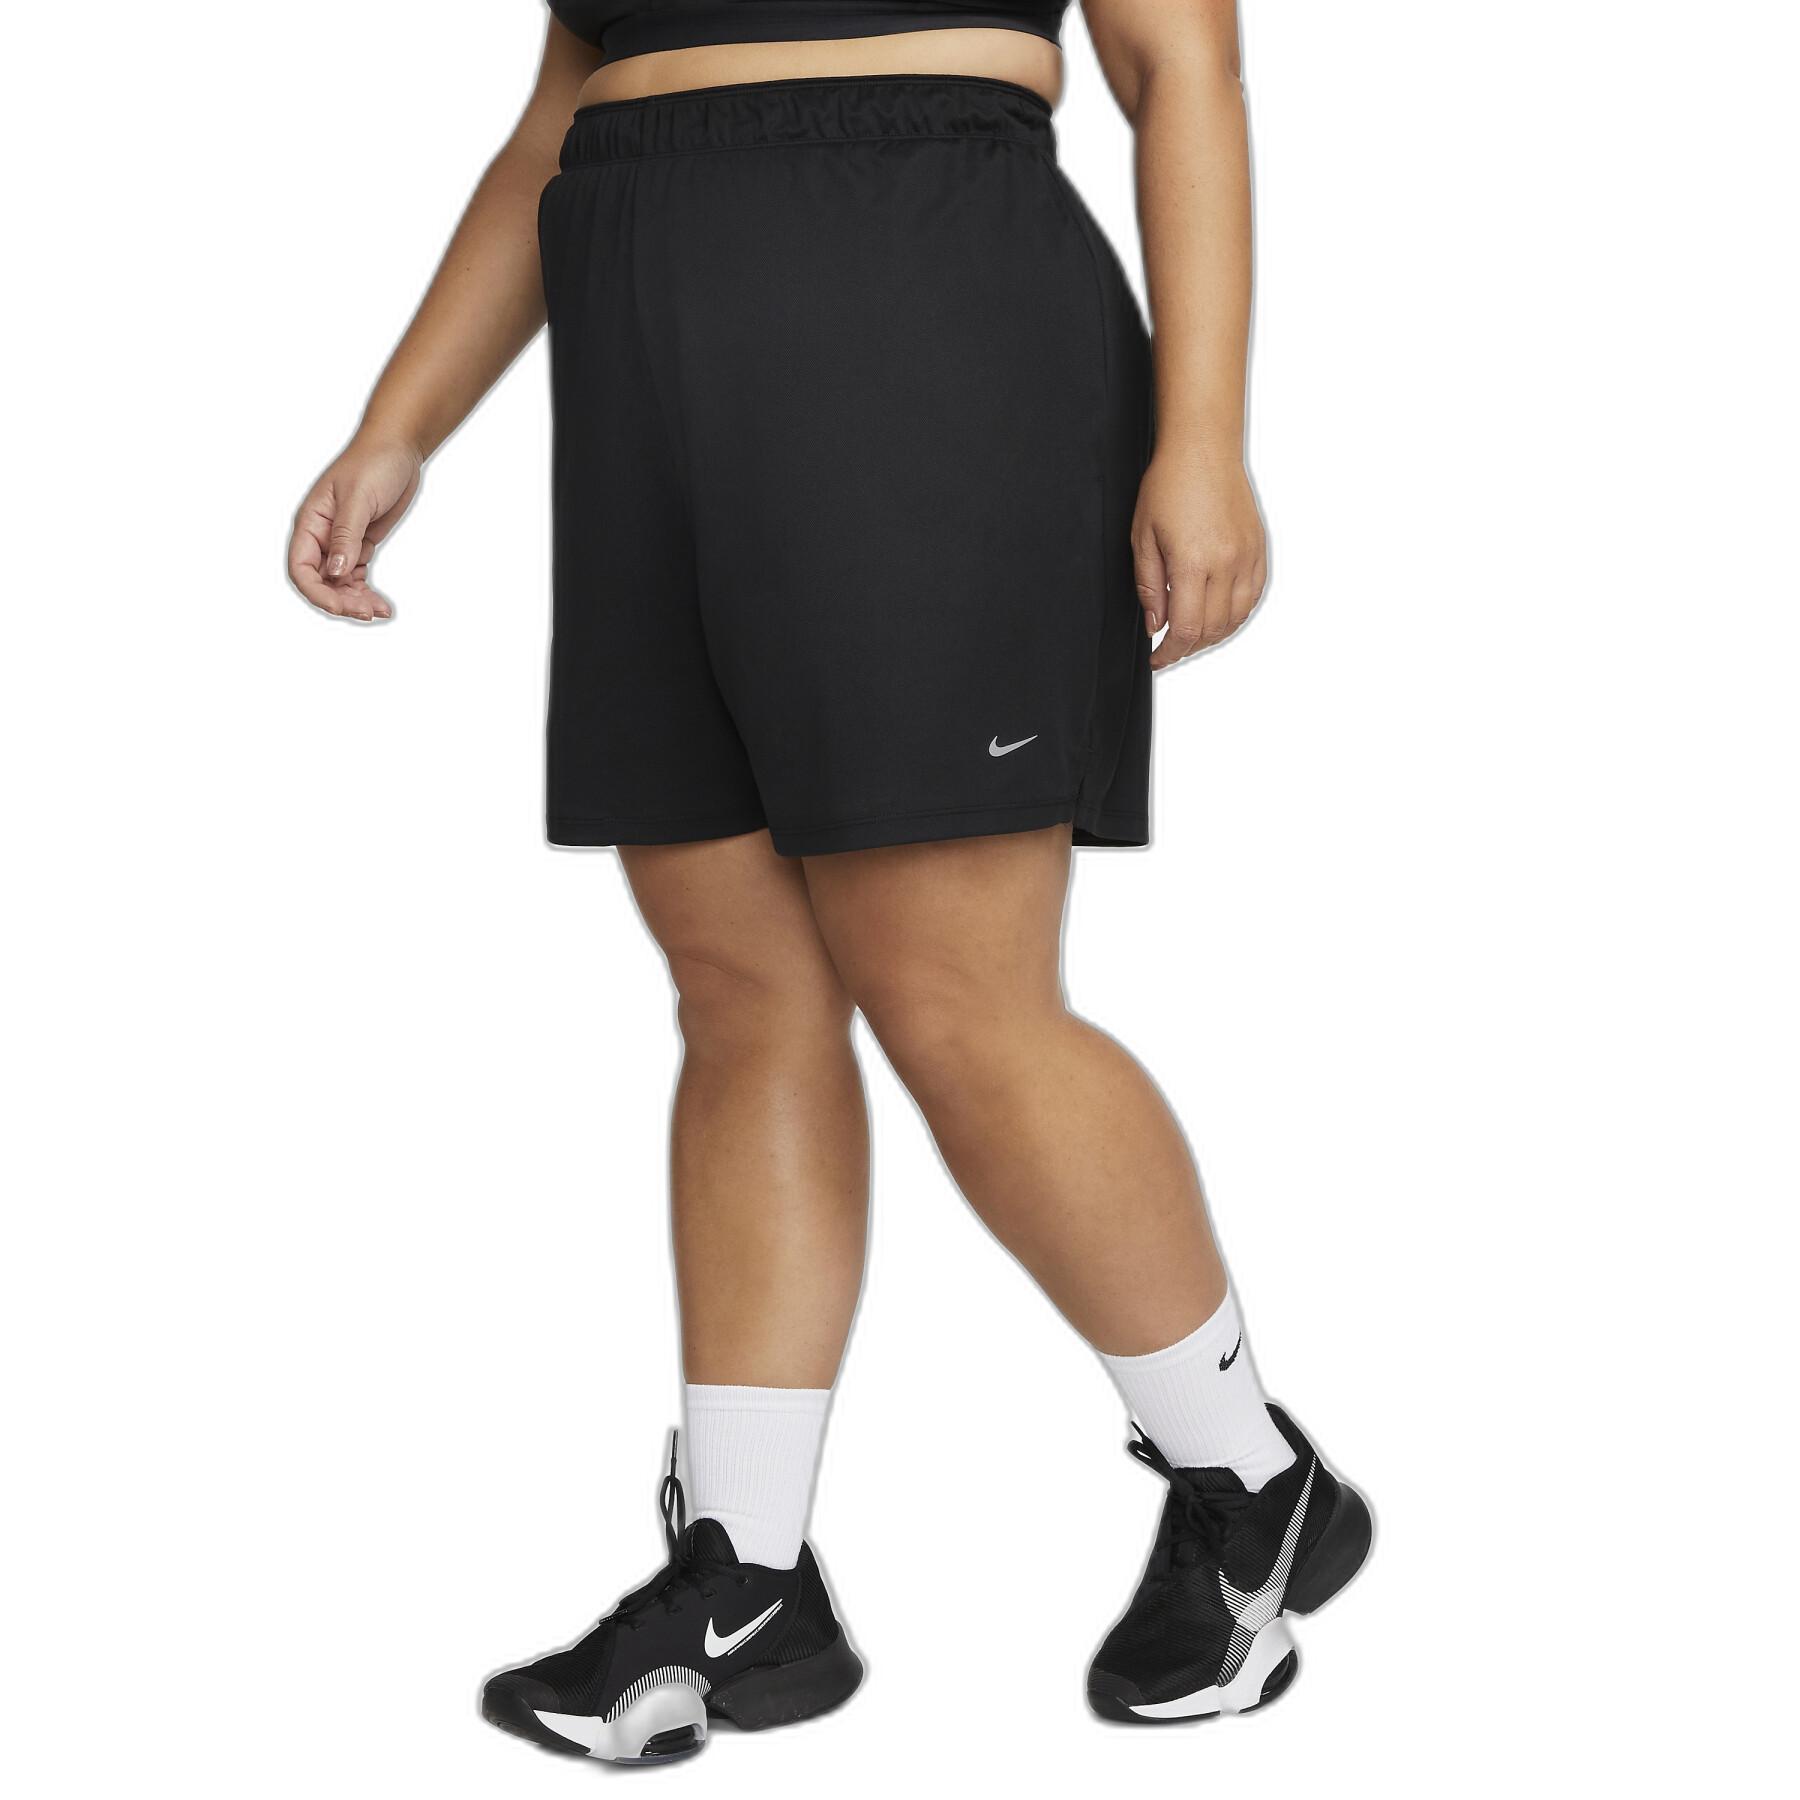 Women's shorts Nike Attack Dri-Fit 5 "